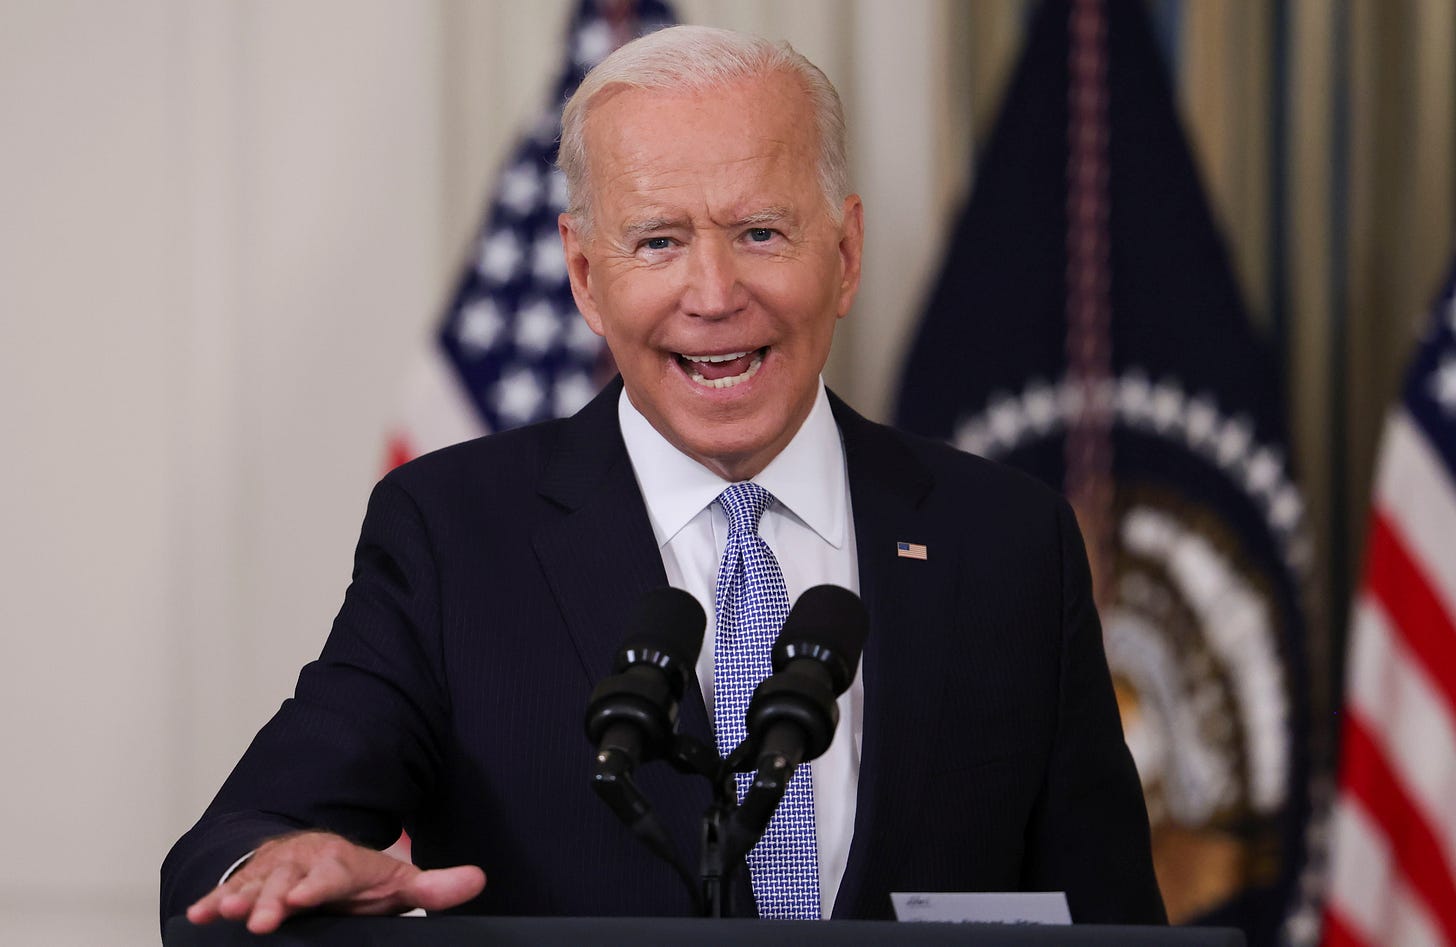 Biden cites stalemate over spending but confident bills will pass | Reuters